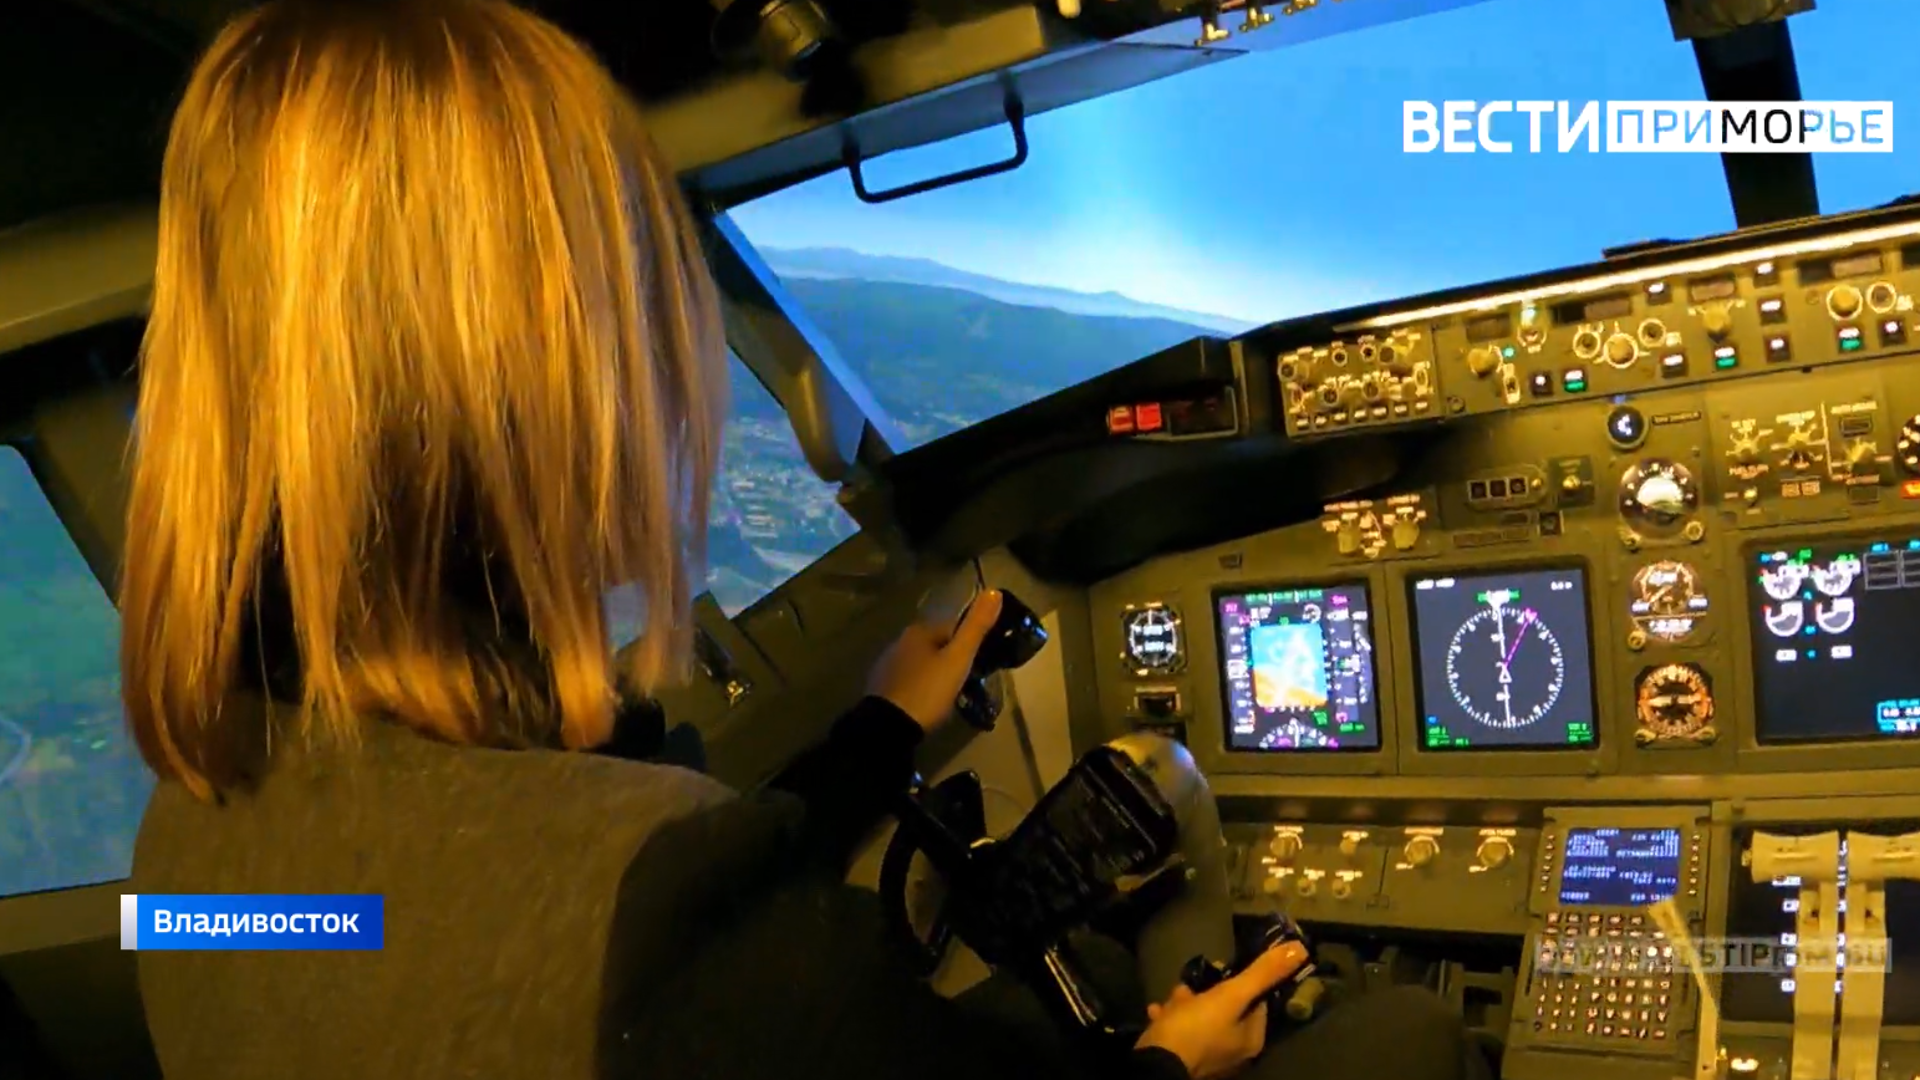 Dream 航空飞行模拟器将让符拉迪沃斯托克居民感觉像飞行员并克服恐空症